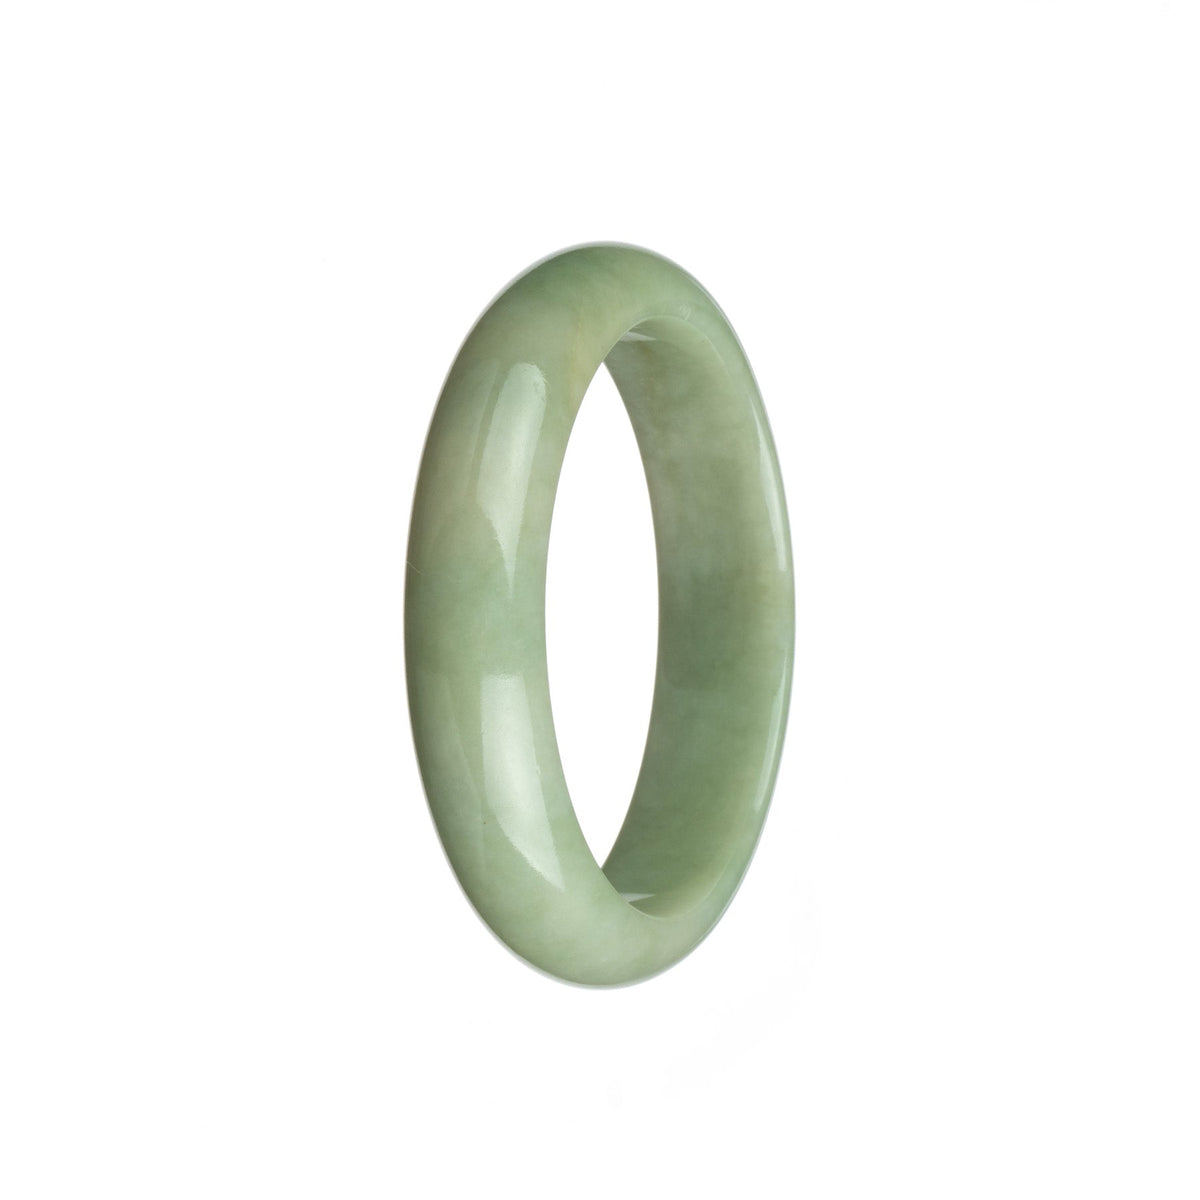 Genuine Grade A Off White Jadeite Jade Bangle Bracelet - 55mm Half Moon